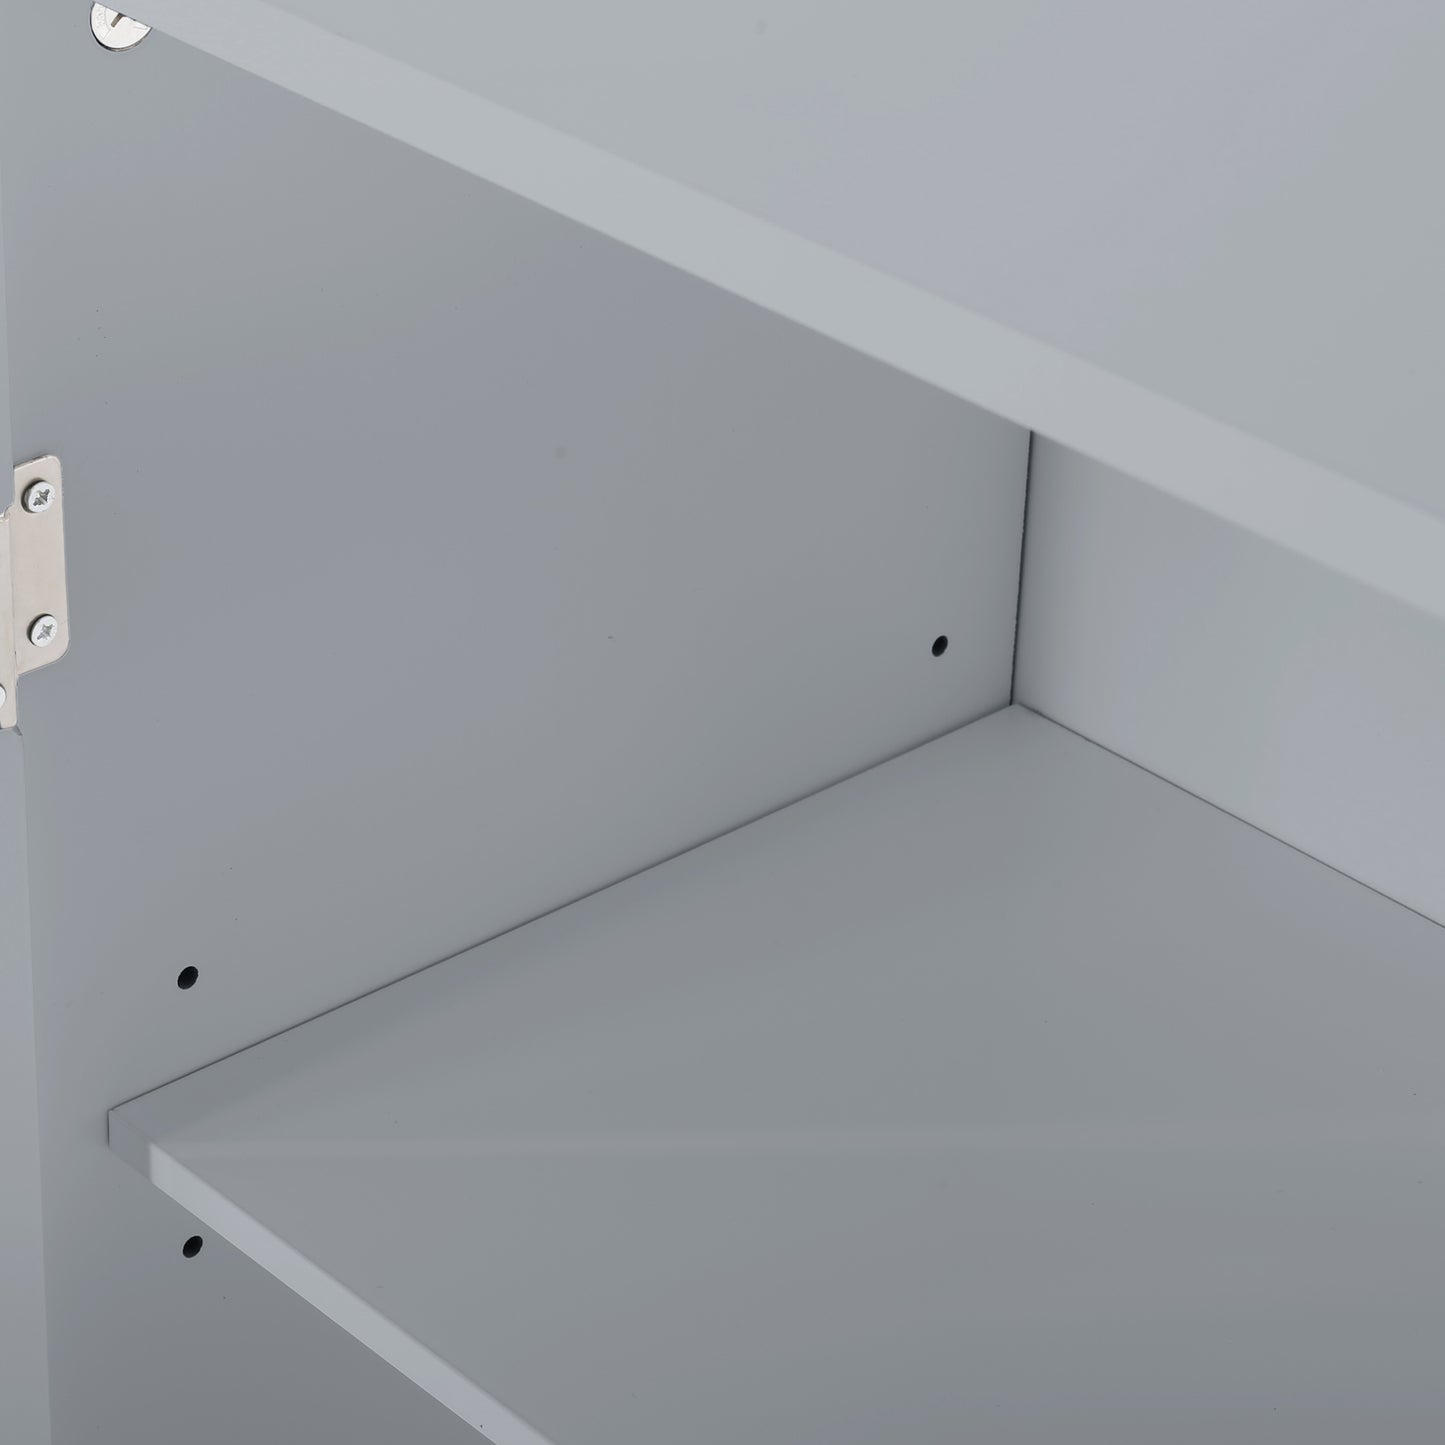 Ascutney Modern Bathroom Storage Cabinet